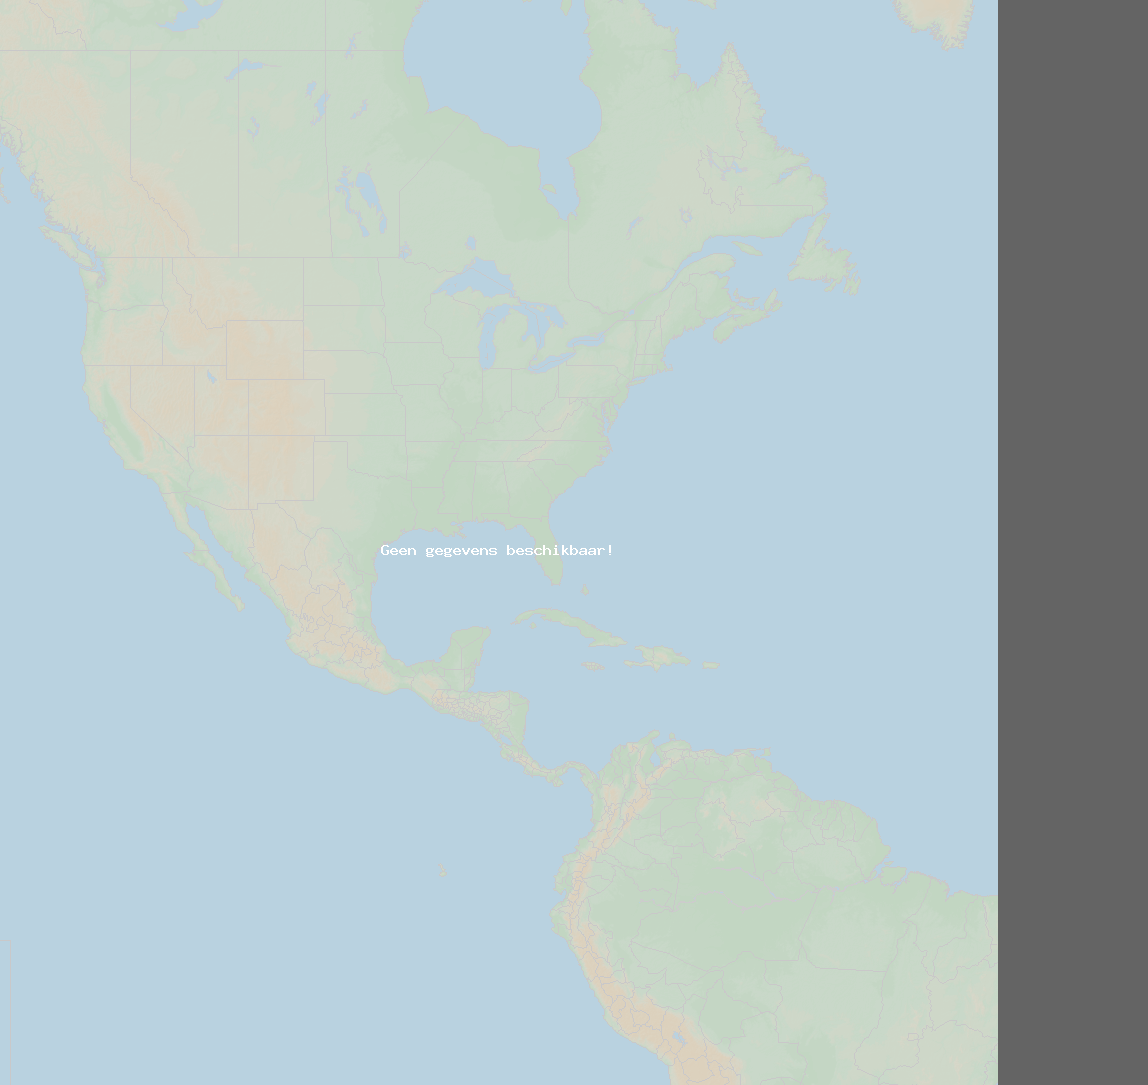 Inslagverhouding (Station Anchorage) North America 2020 